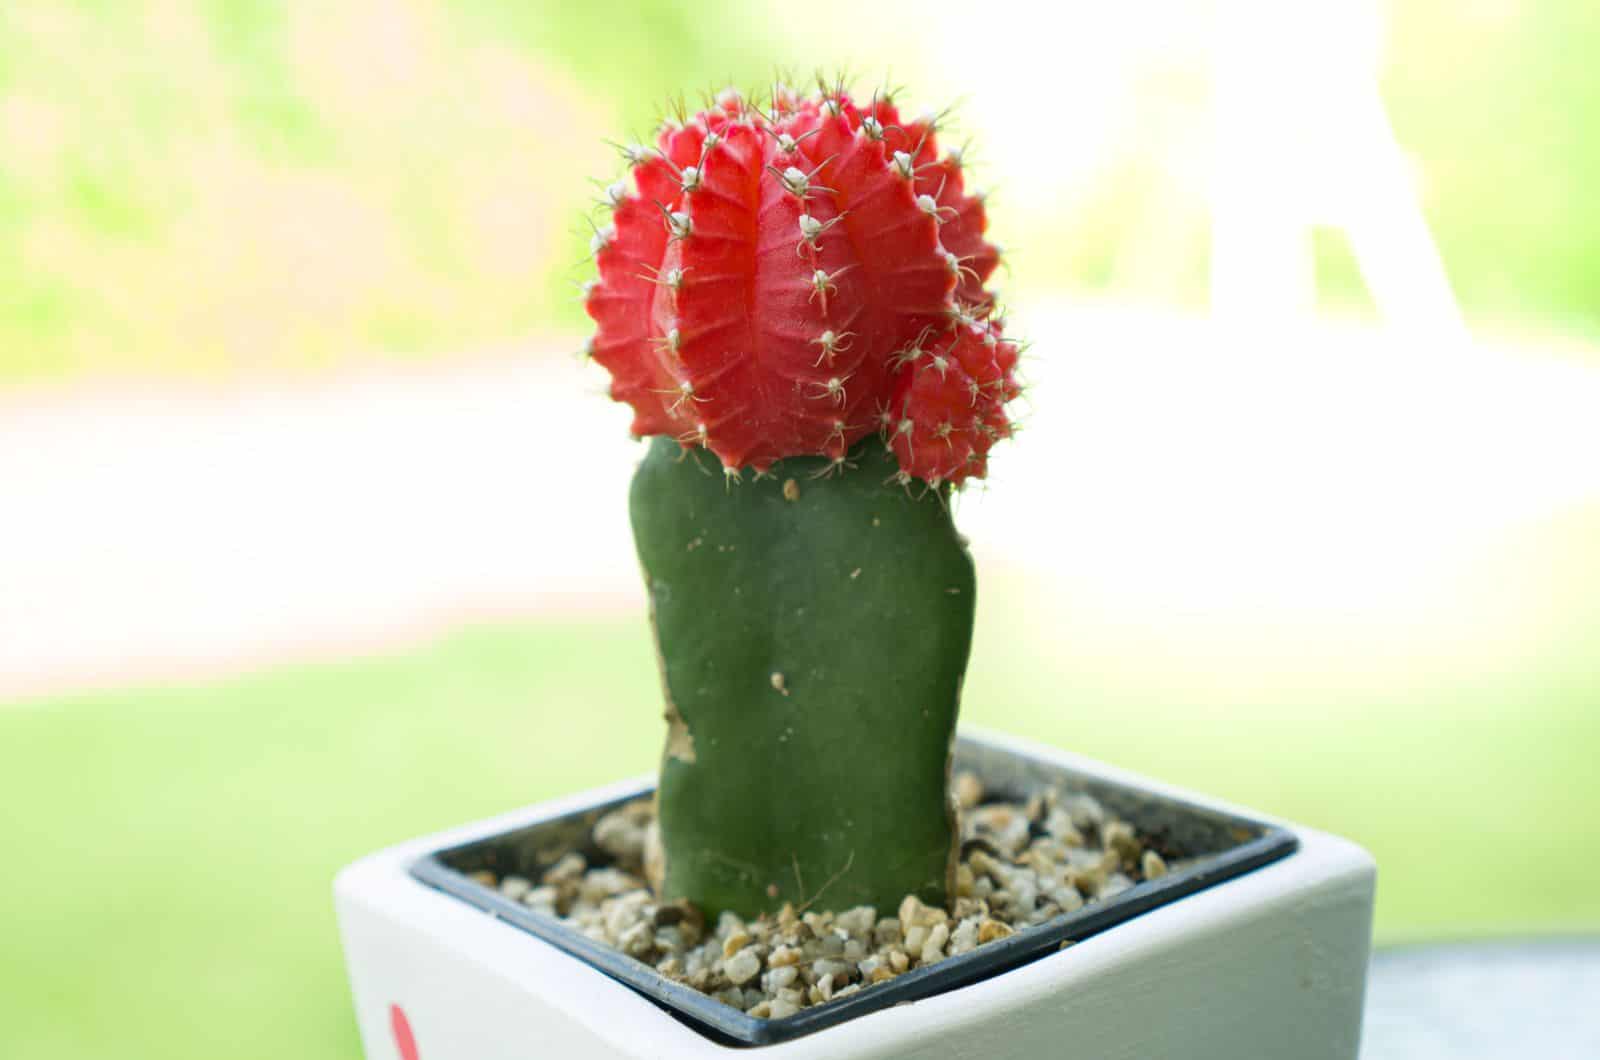 moon cactus in a pot